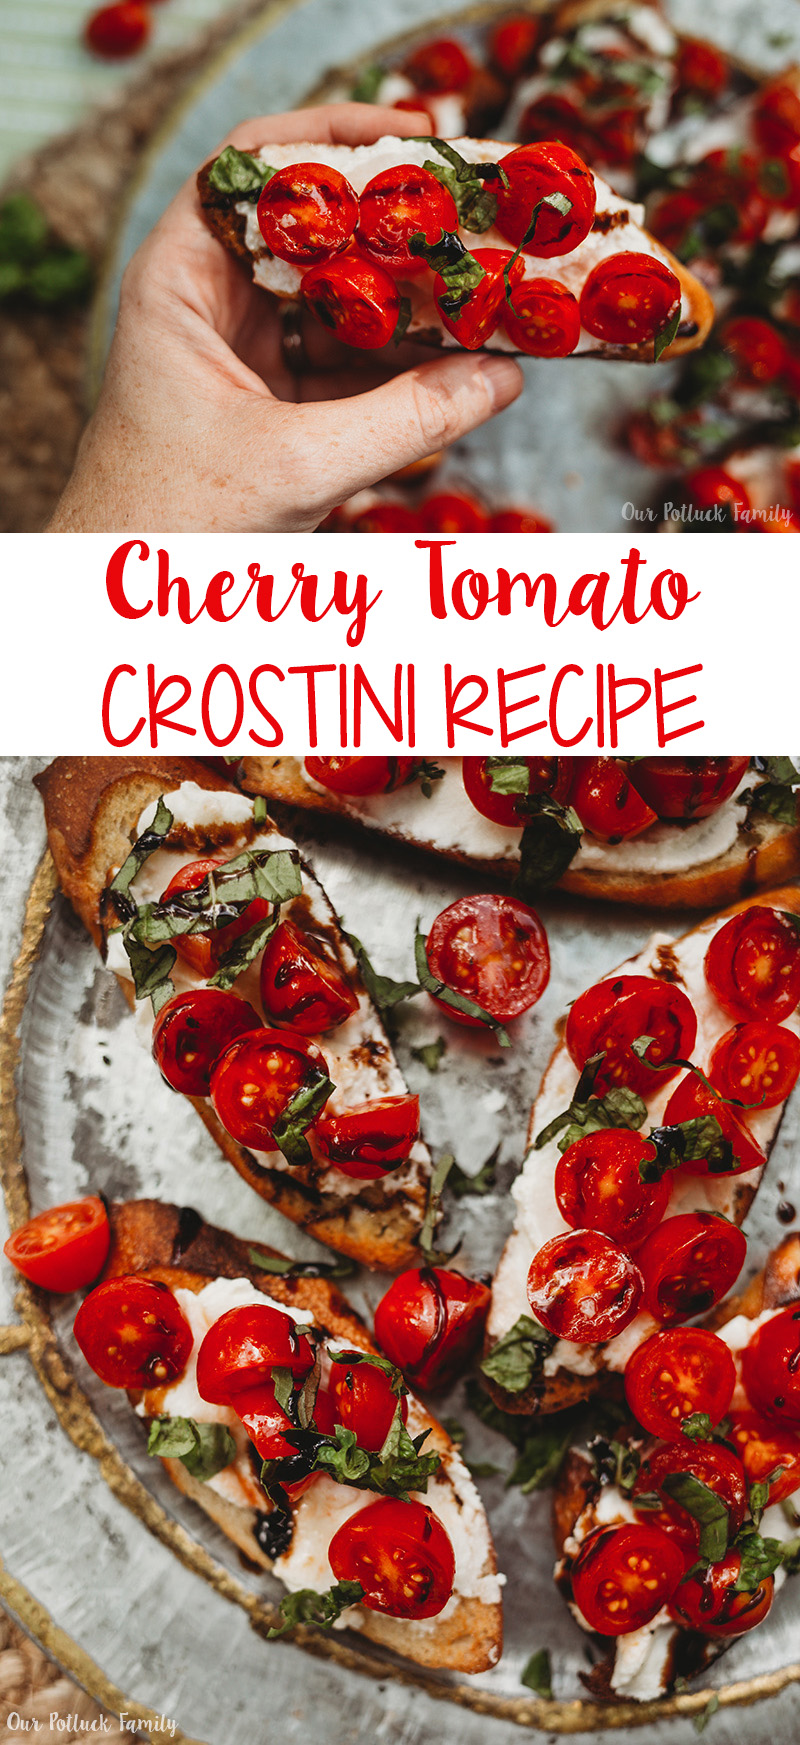 Cherry Tomato Crostini Recipe